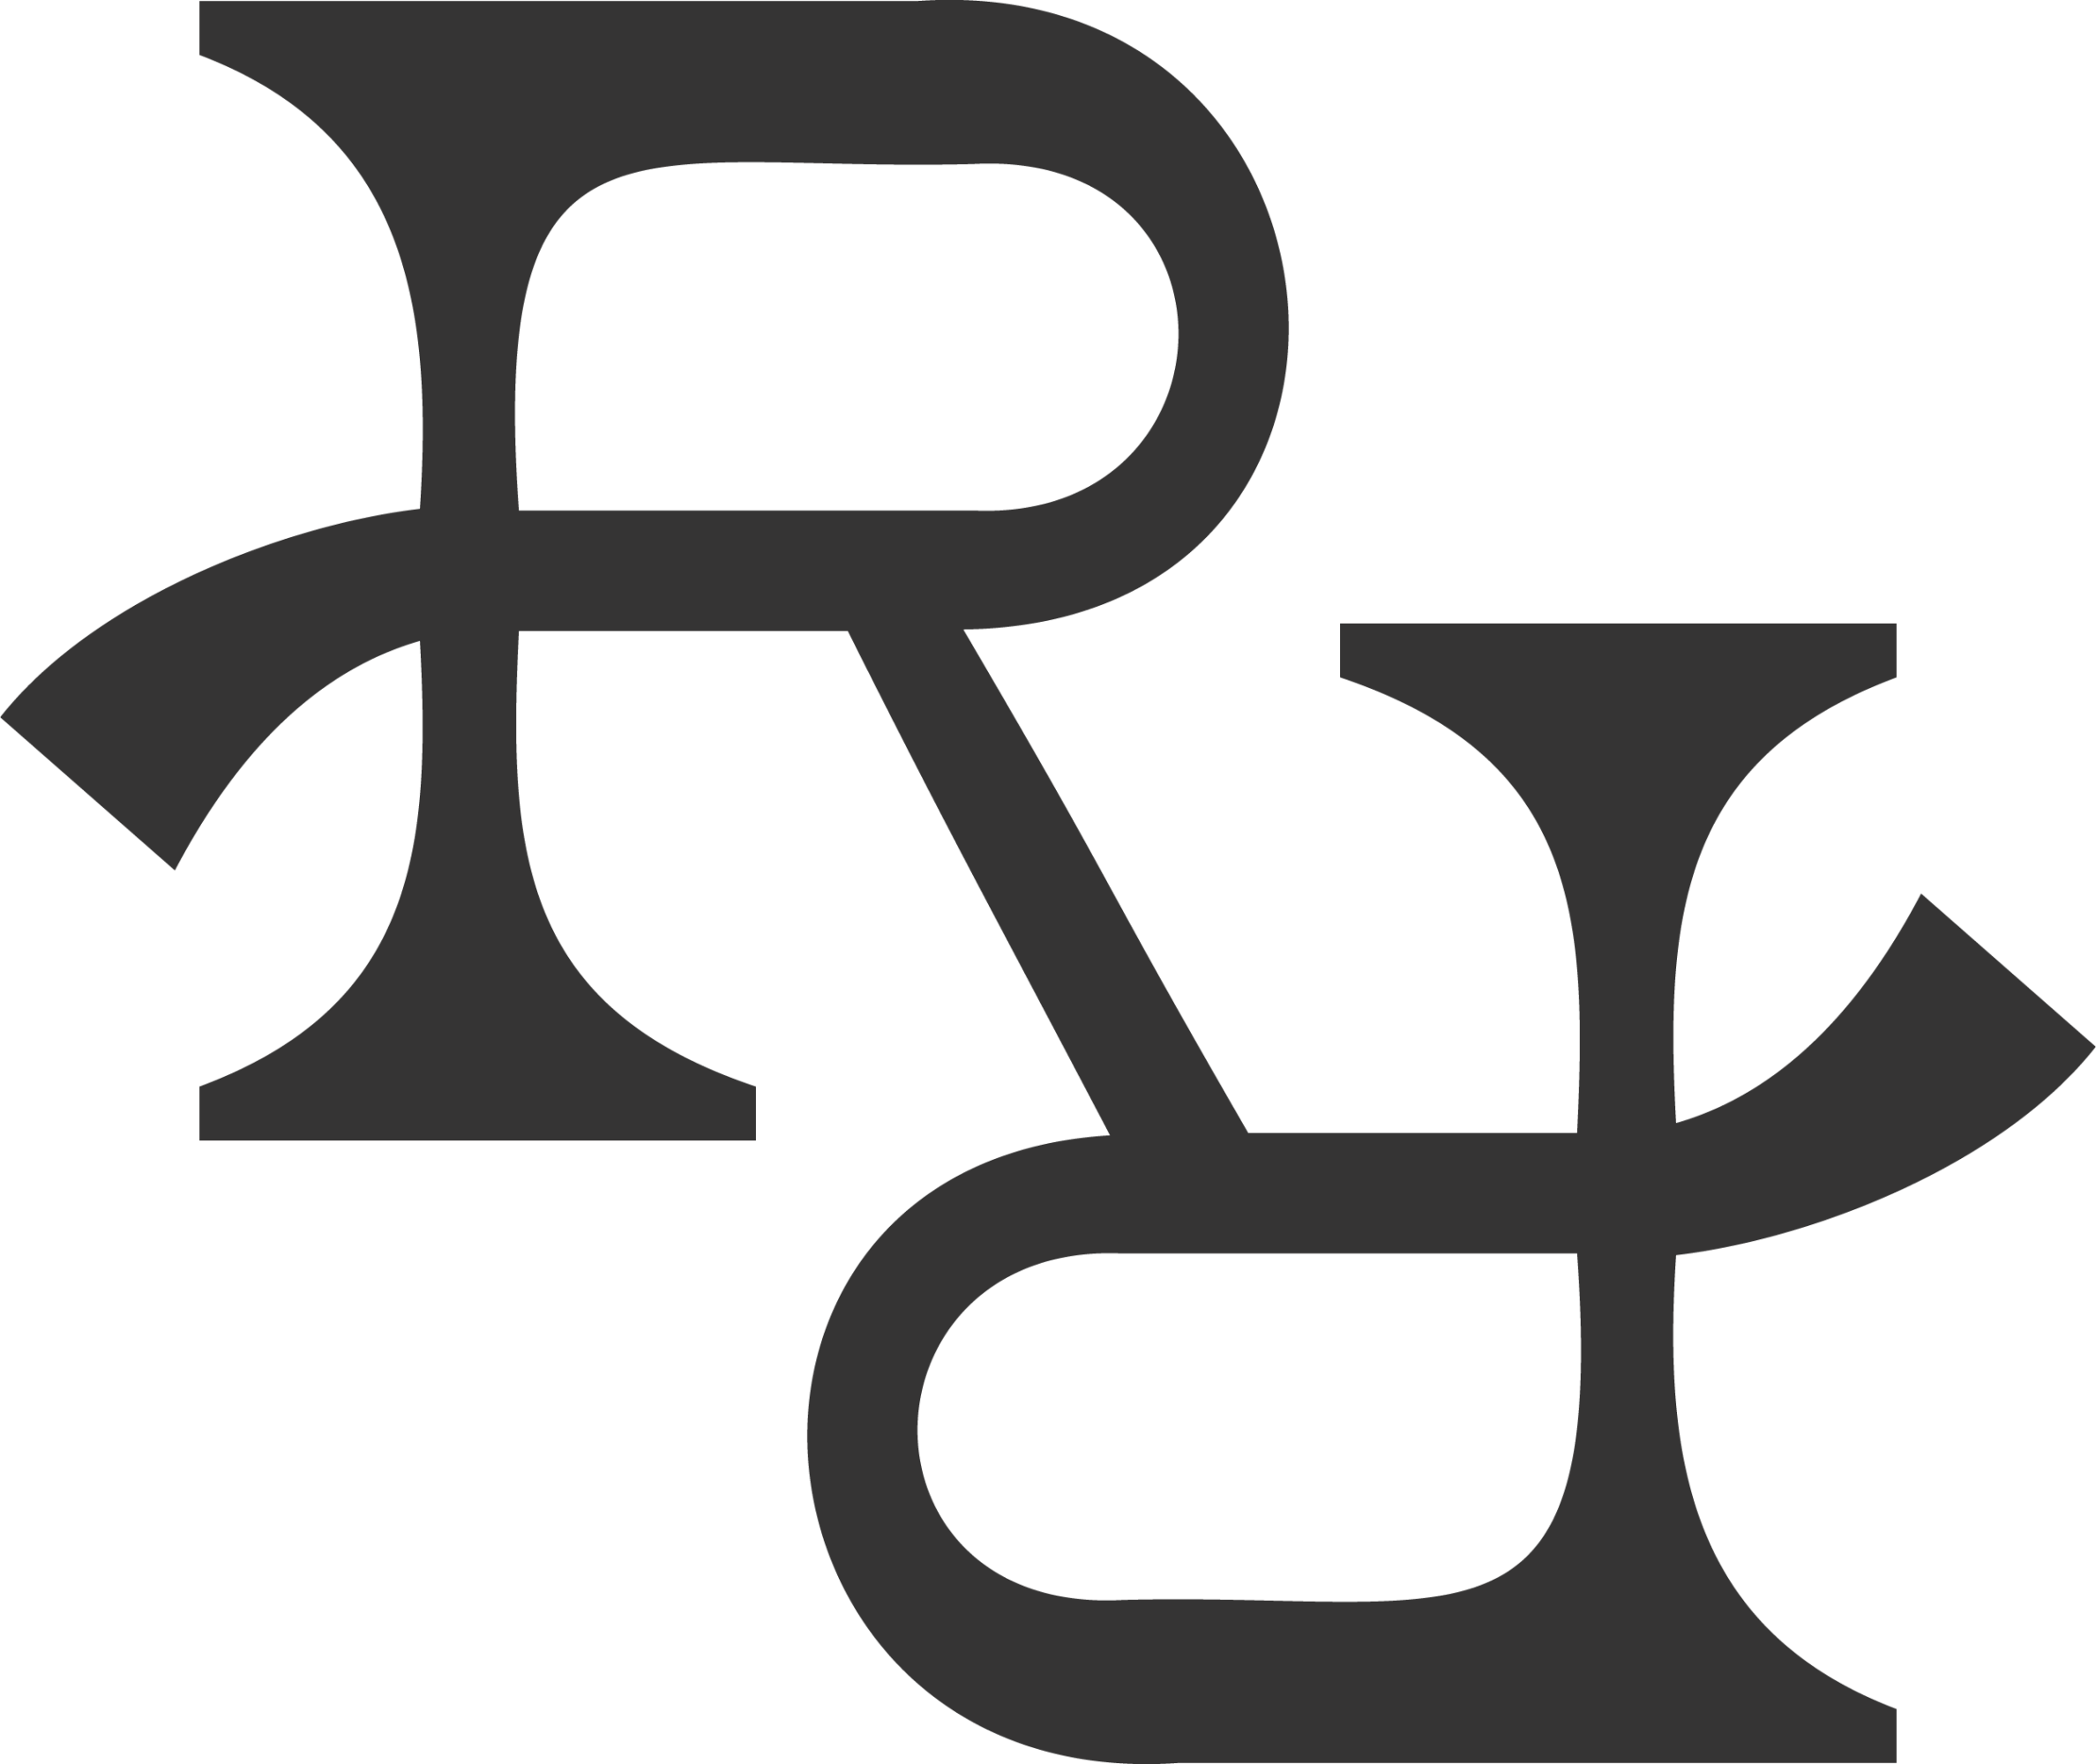 rachael rose logo mark full color rgb 2500px w 300ppi